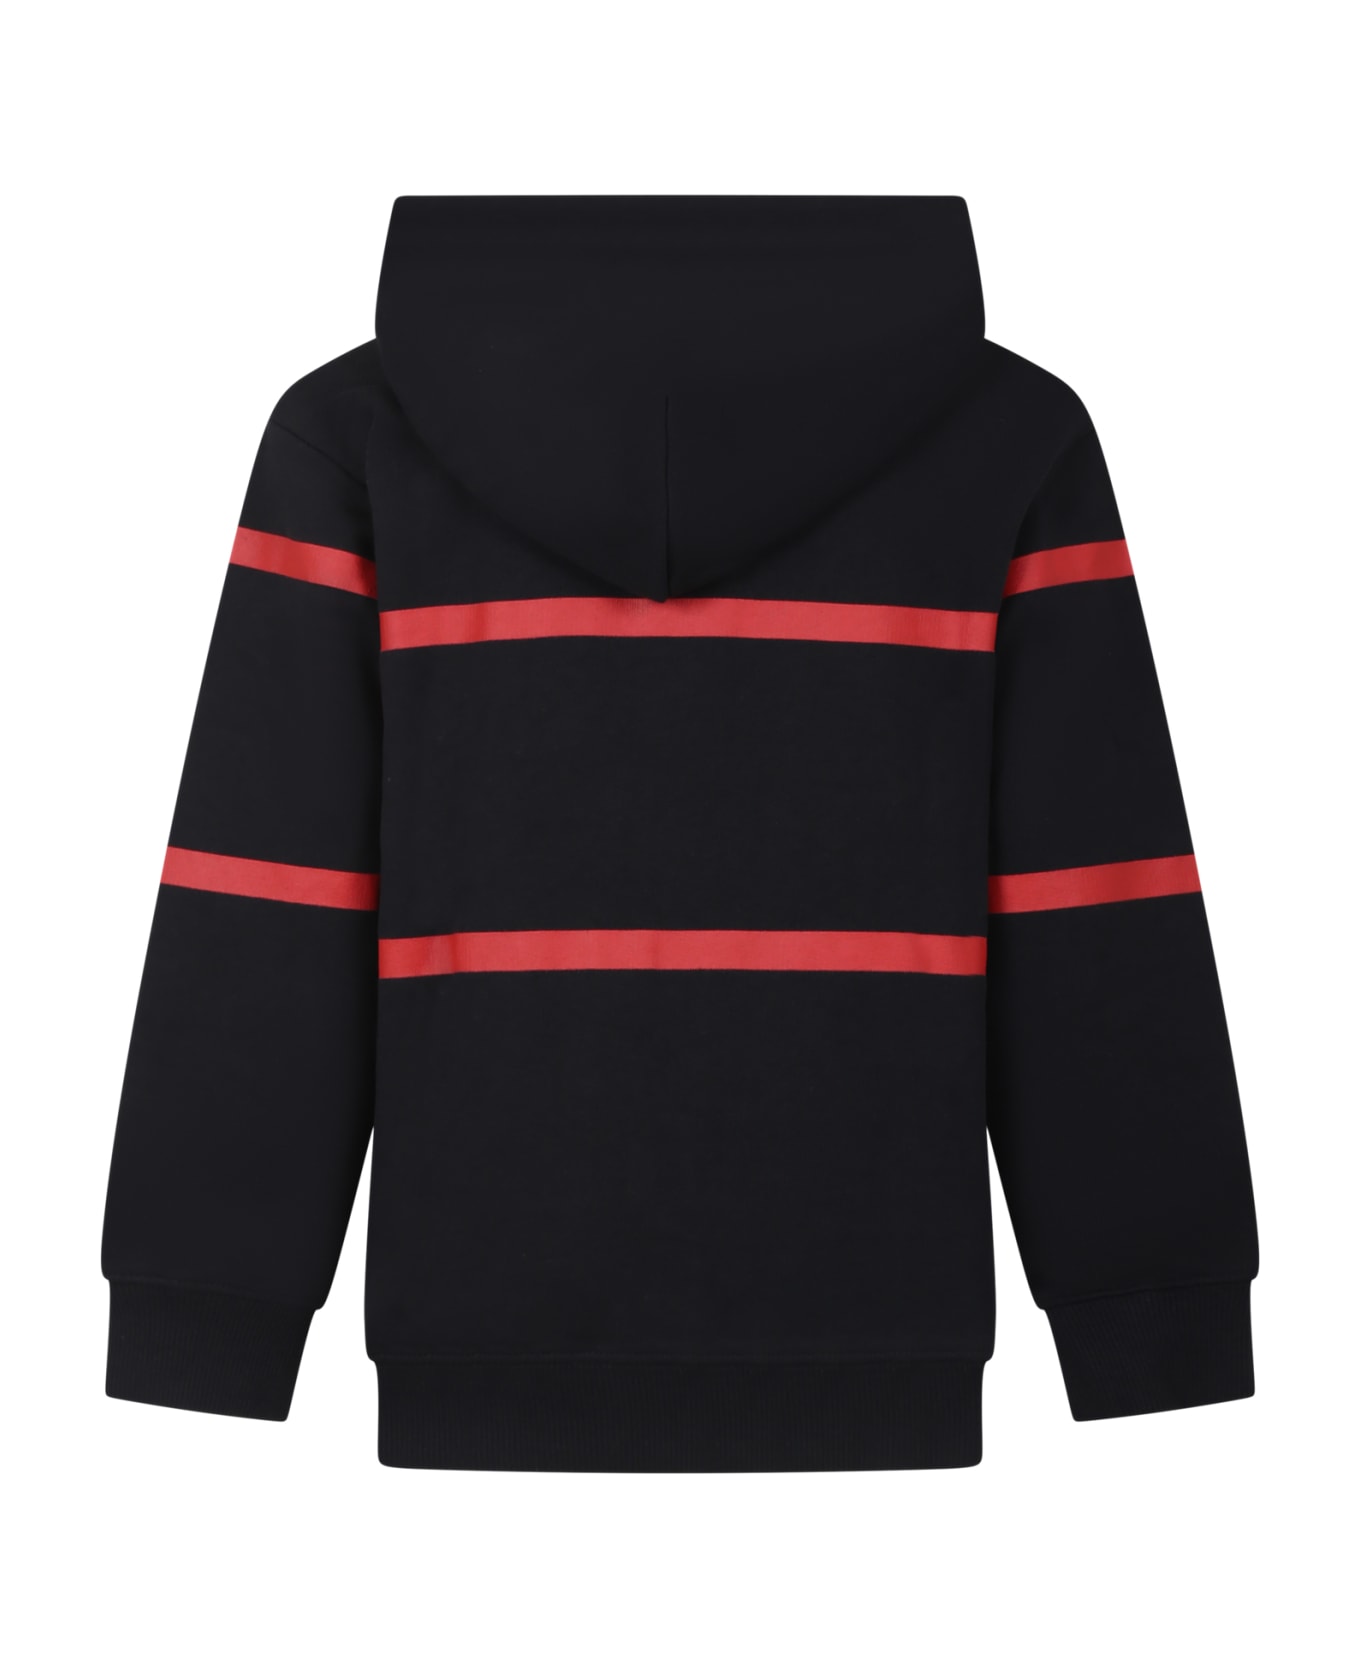 GCDS Mini Black Sweatshirt For Kids With Stripes And Logo - Black